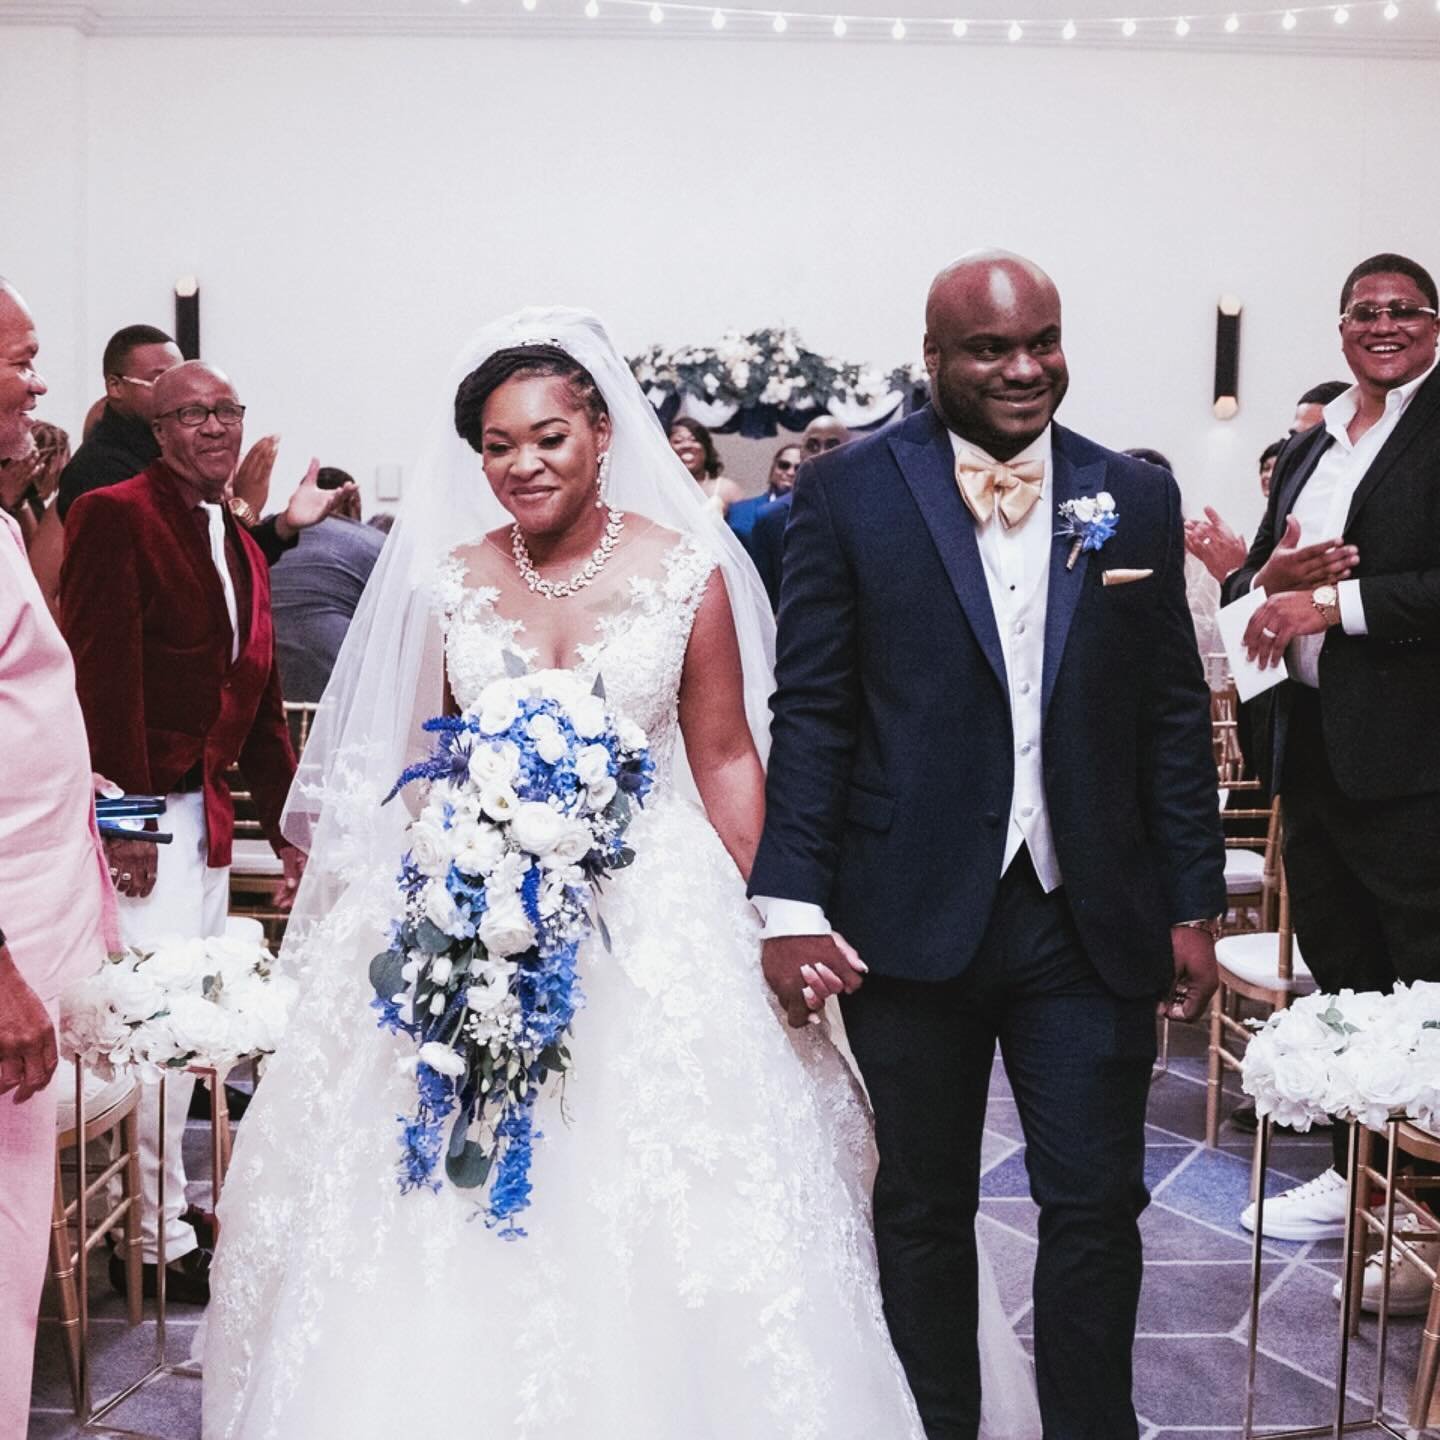 Meet The Crosbys! 💍✨ 

#TyingTheKnot #ForeverUs #WeddingDay #WeddingPhotography #ProvidenceWedding #WeddingPhoto #FamilyLove #BlackLove